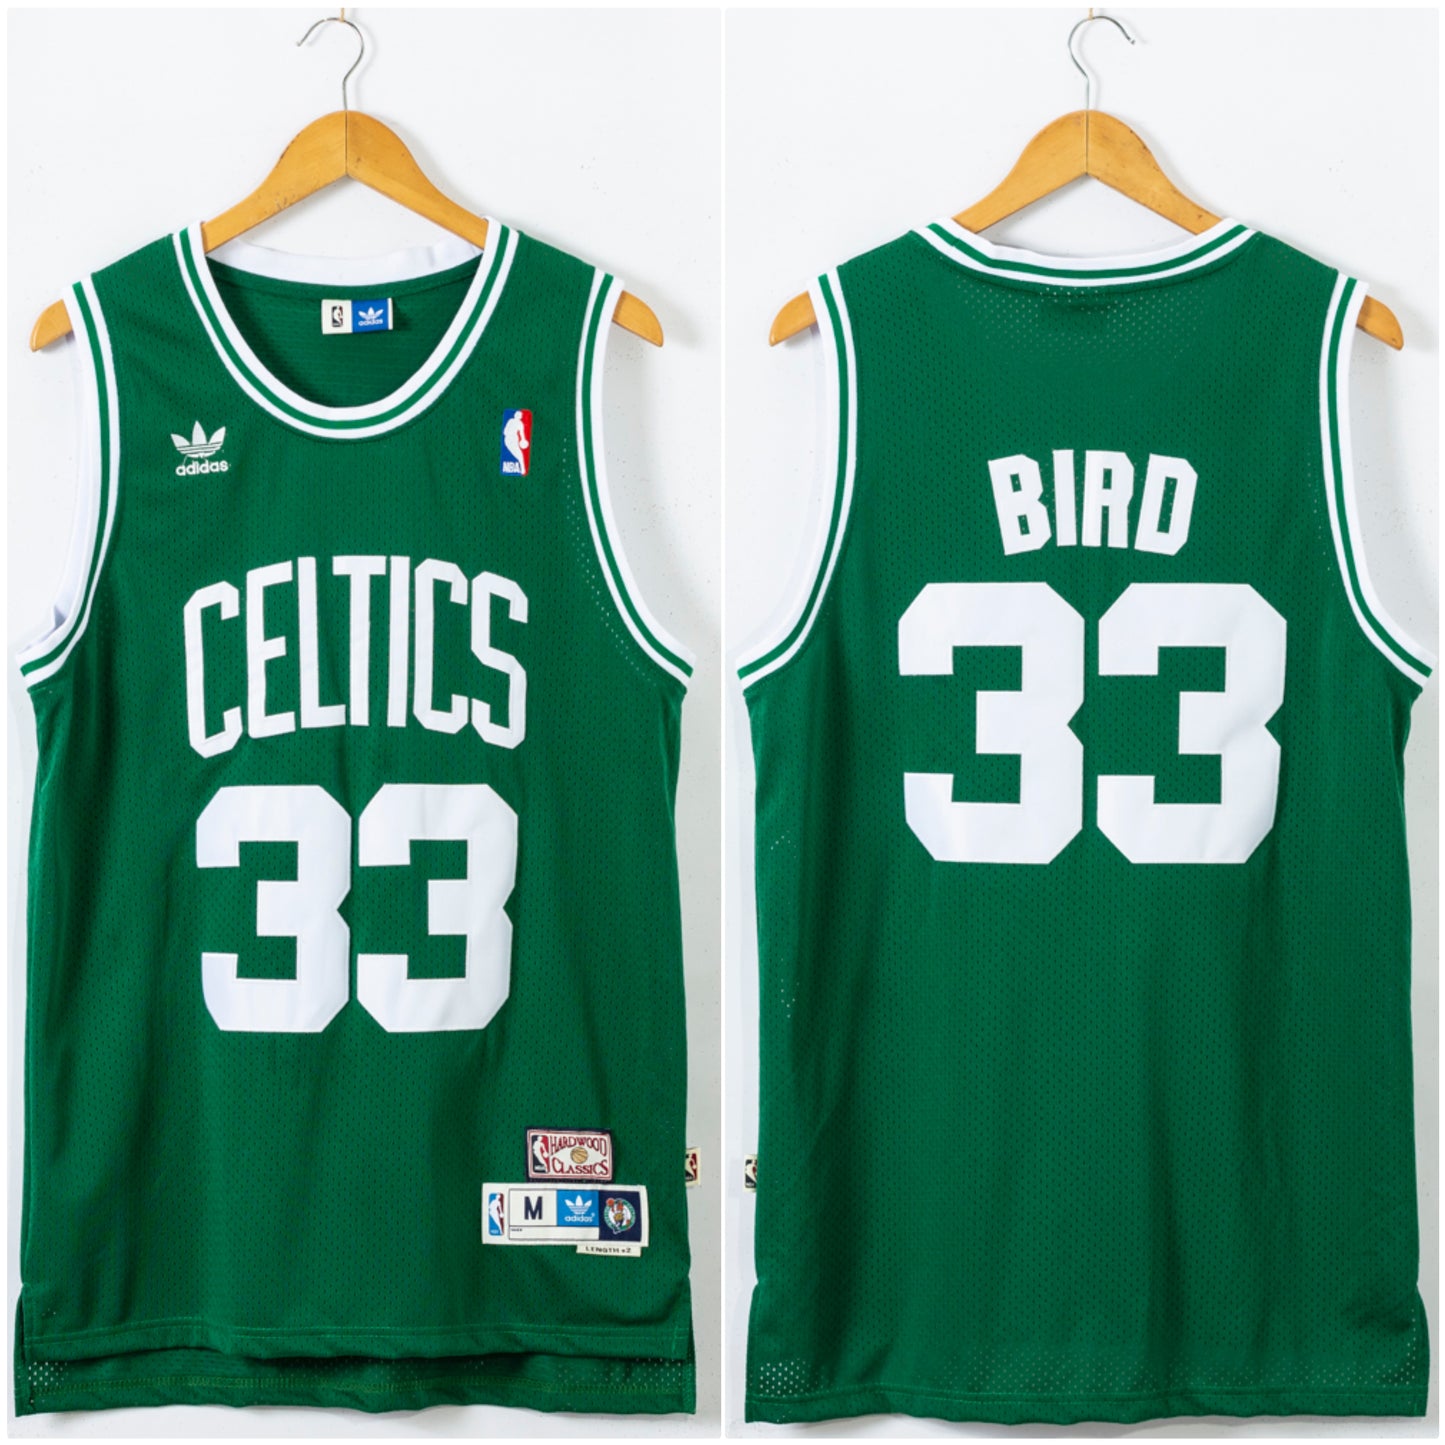 BIRD 33 Green Boston Celtics NBA Jersey